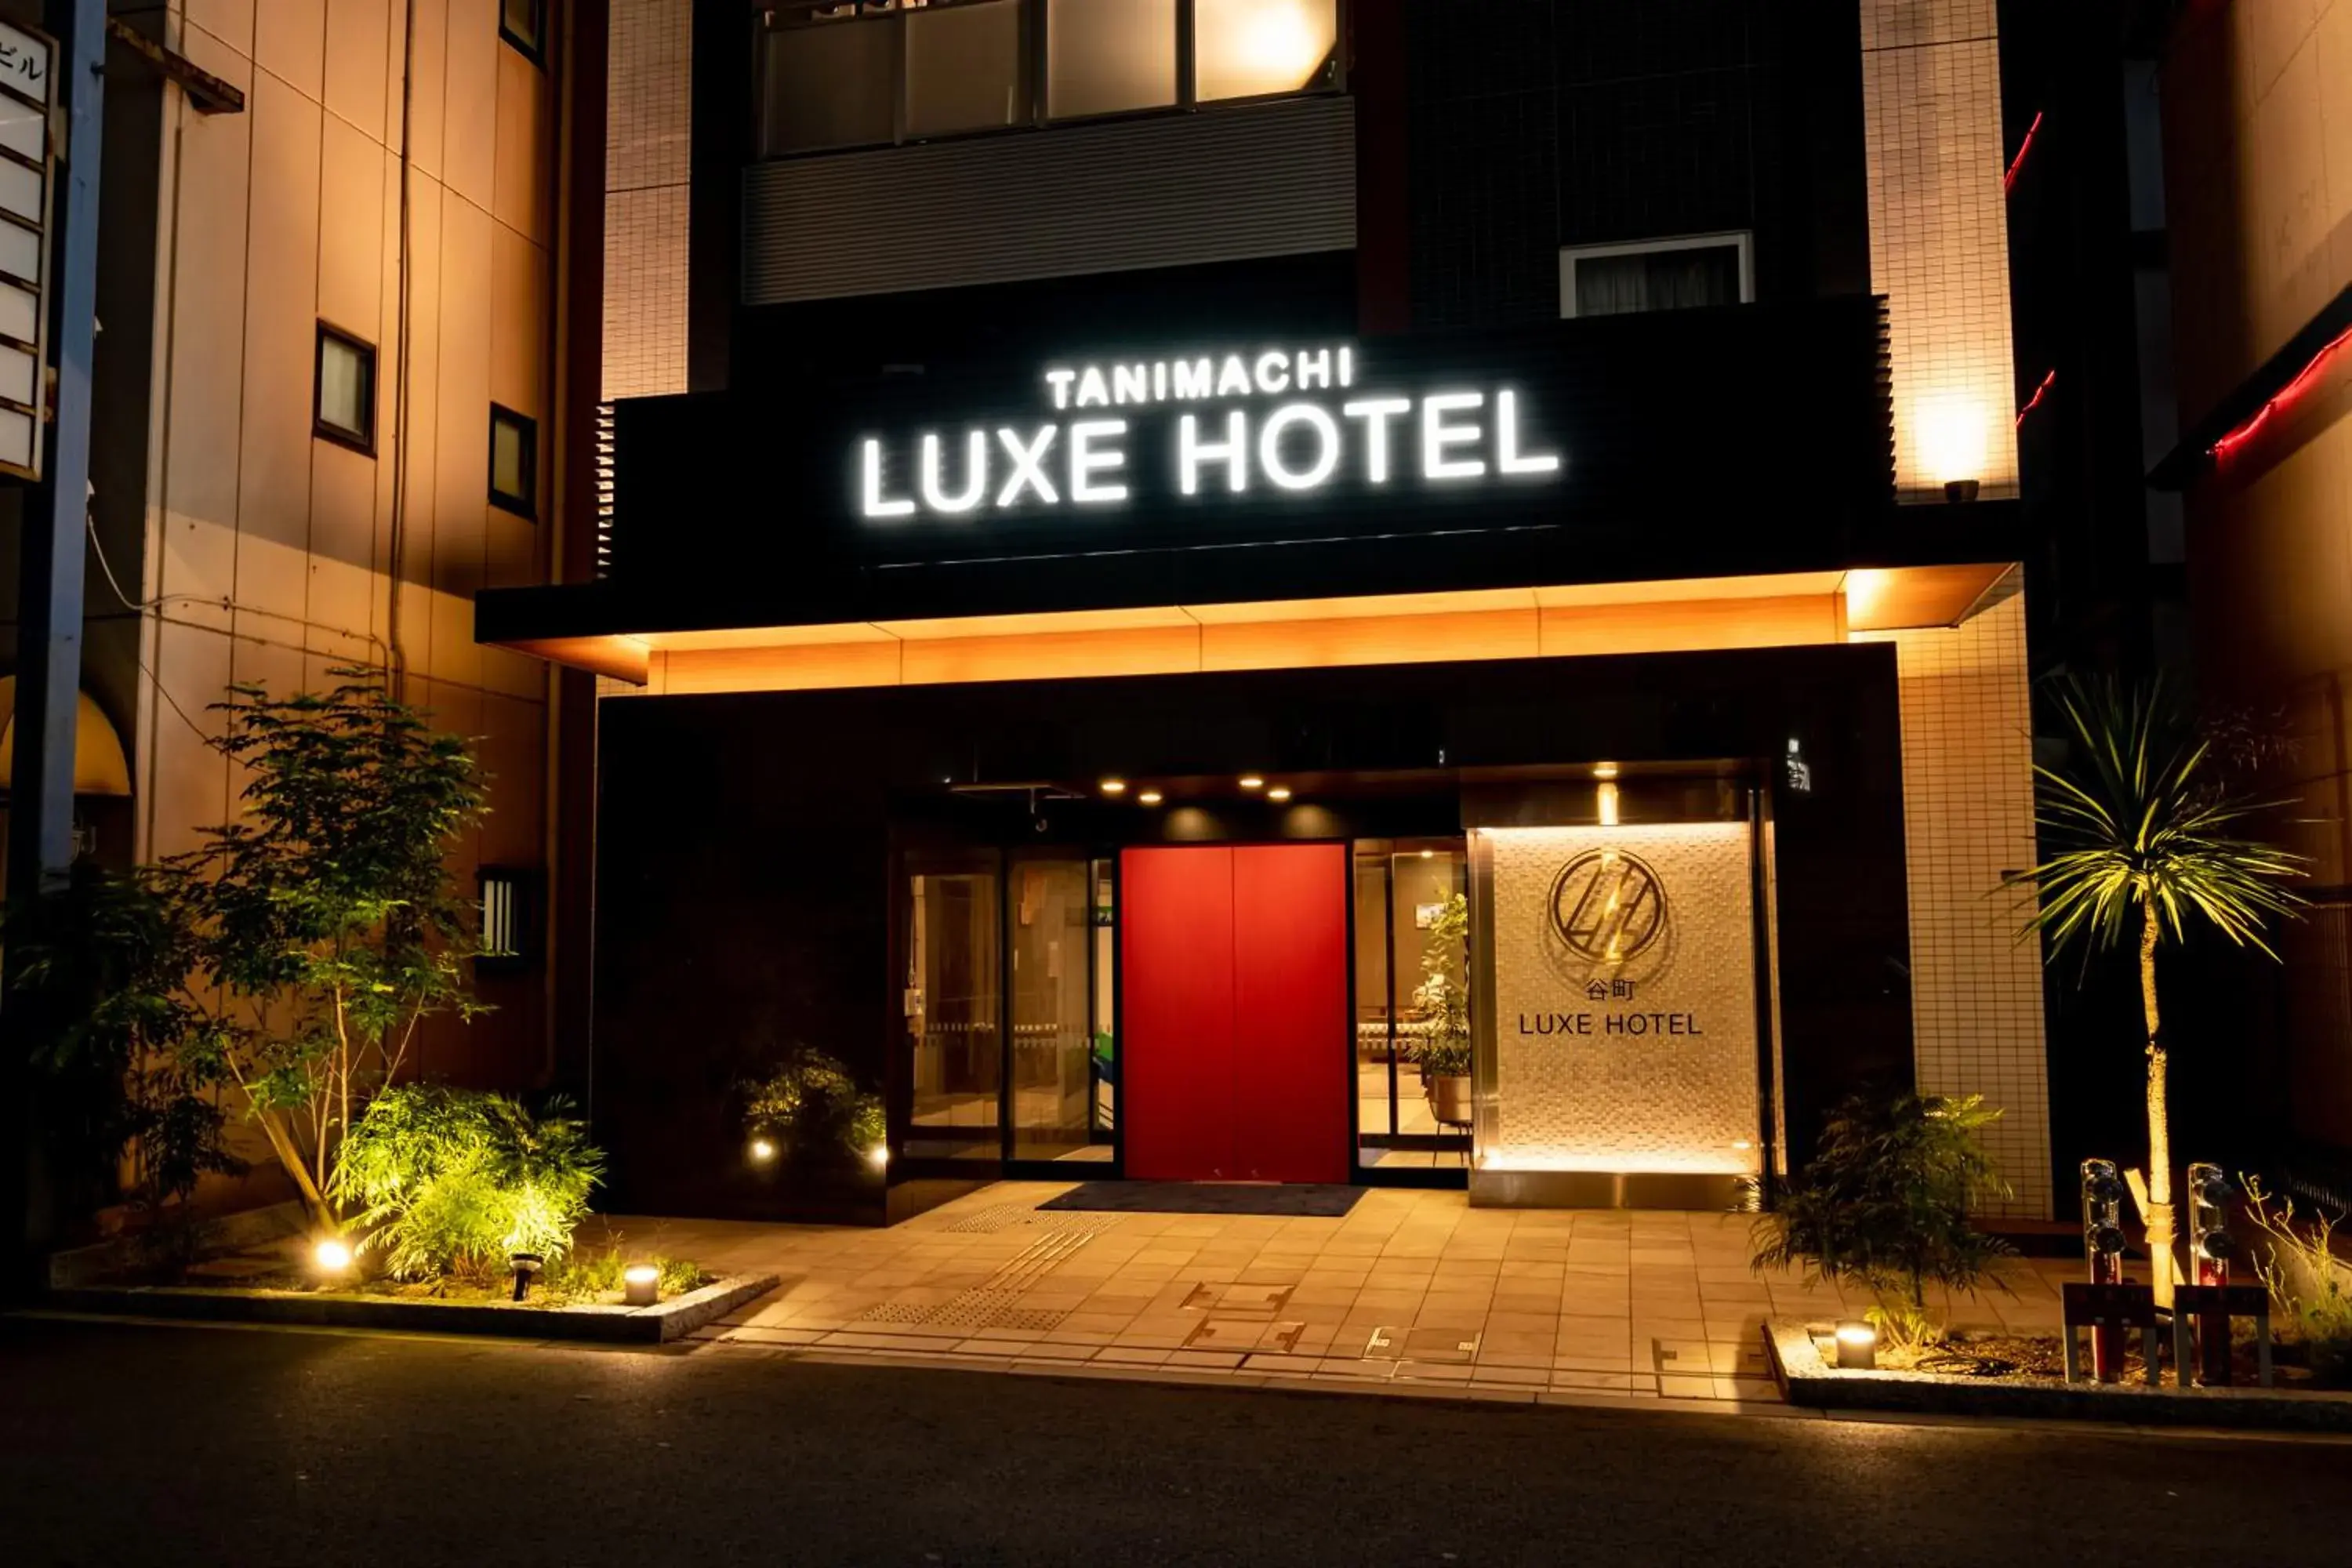 Facade/entrance in Tanimachi LUXE HOTEL